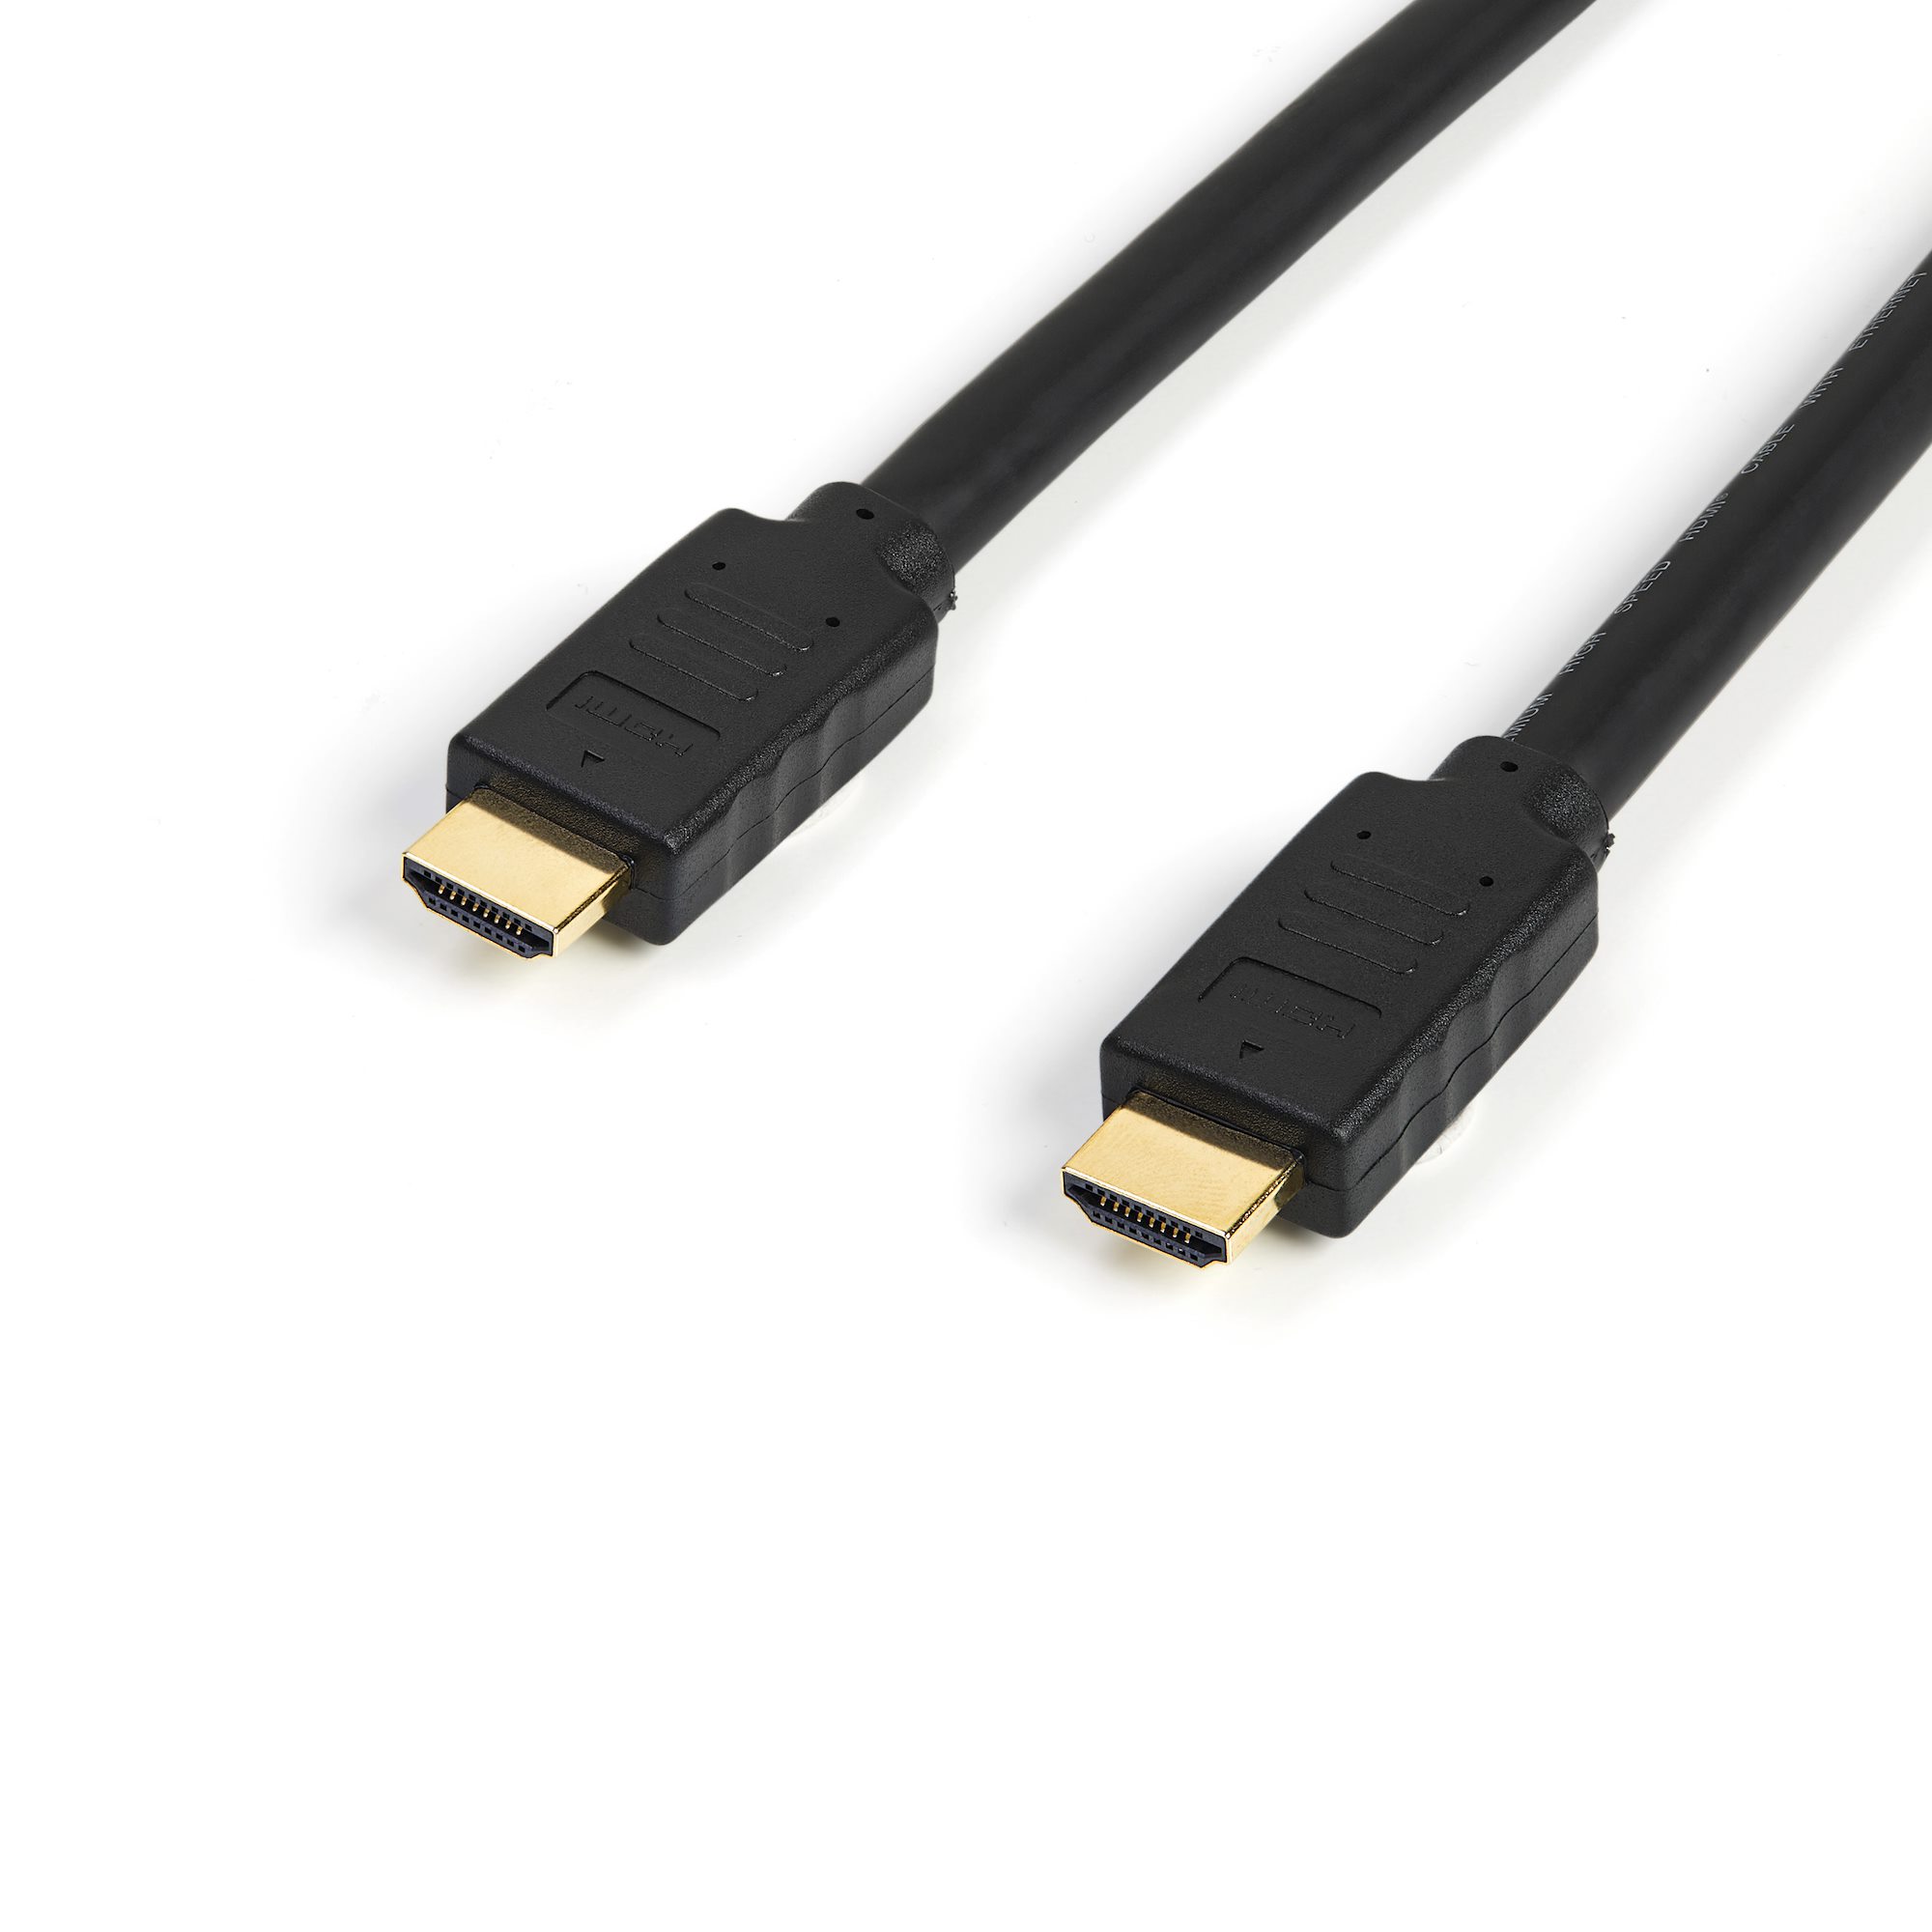 verlies uzelf Artiest Verstrooien 23ft 7m Premium HDMI 2.0 Cable 4K 60Hz - HDMI® Cables & HDMI Adapters |  StarTech.com